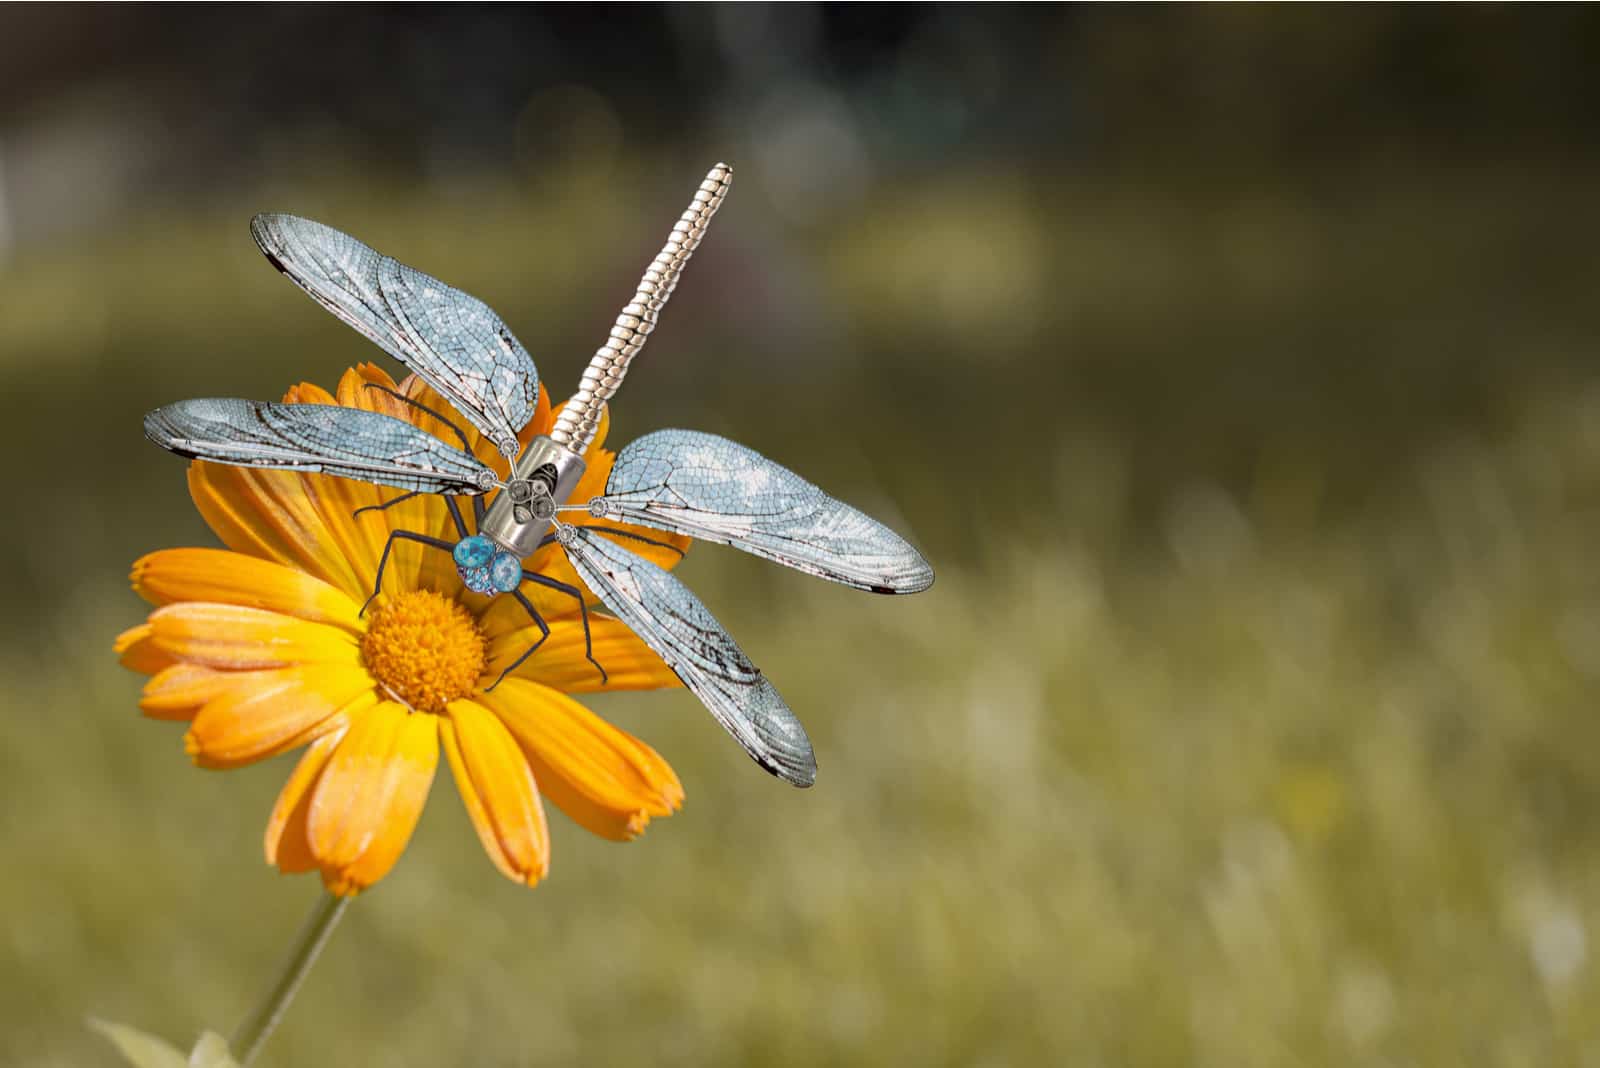 Blue steampunk dragonfly sits on orange marigold flower